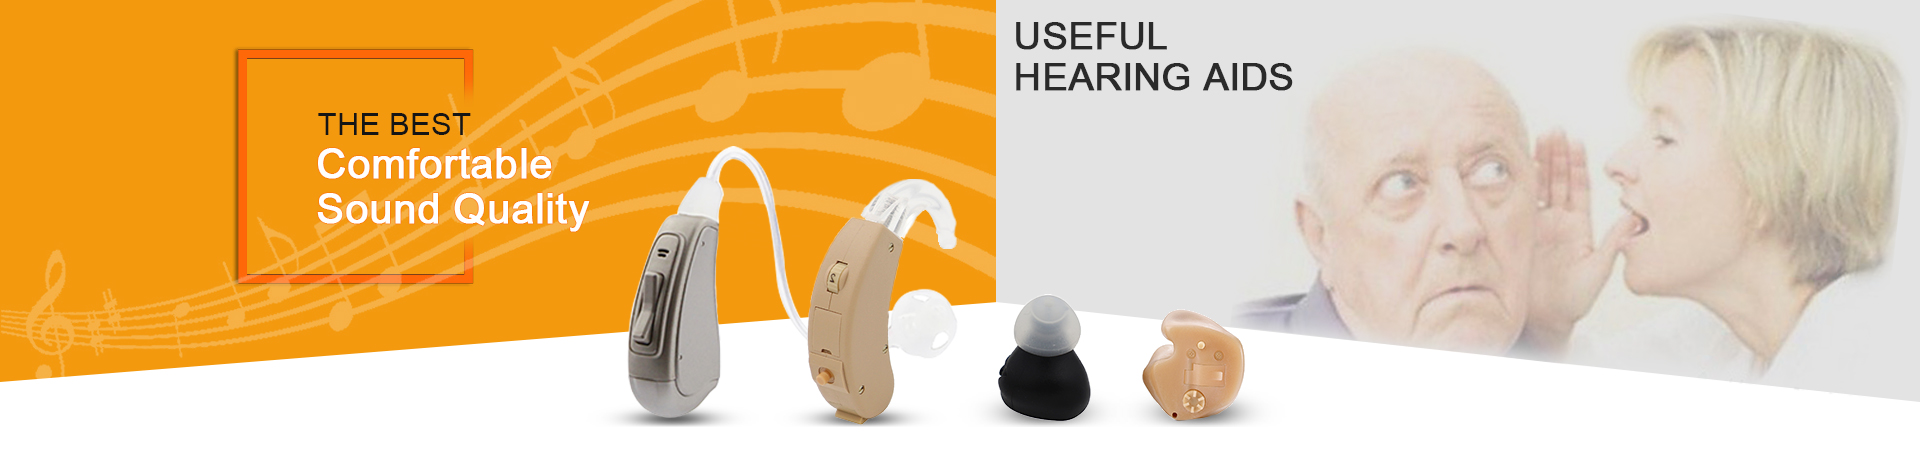 Hearing aids manufacturer, digital hearing aids, bte hearing aids